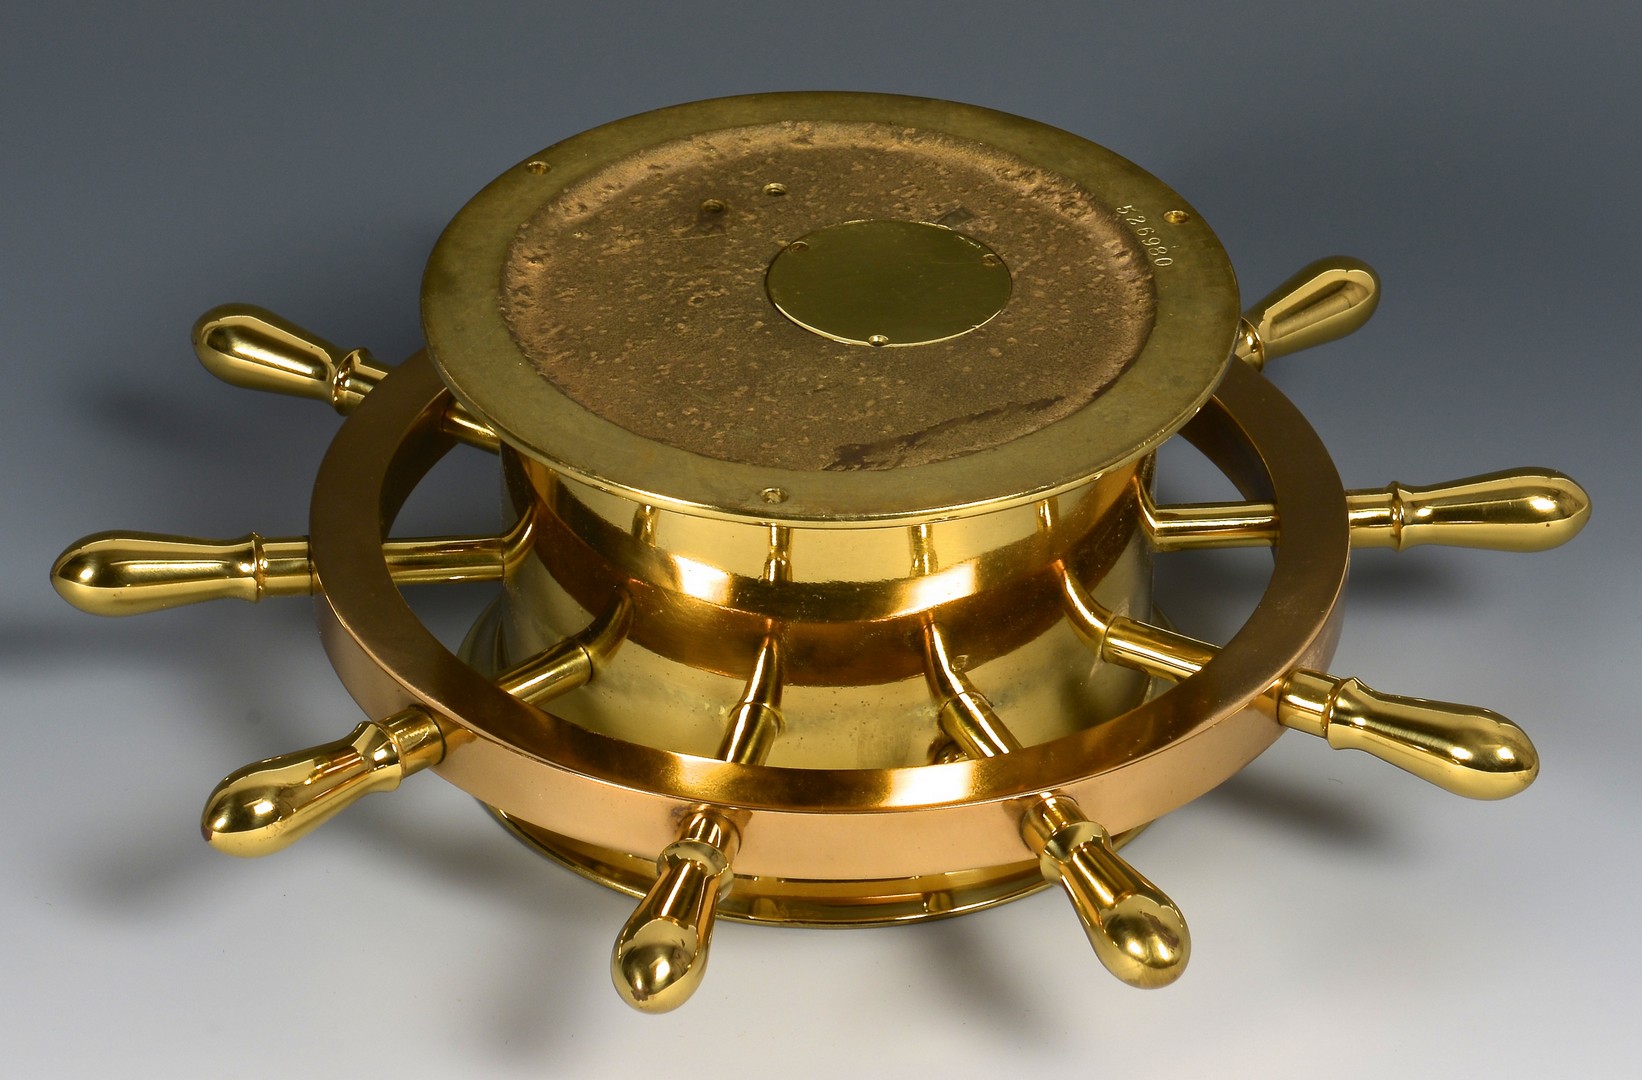 Lot 492: Brass Marine Chelsea Ship’s Bell Clock